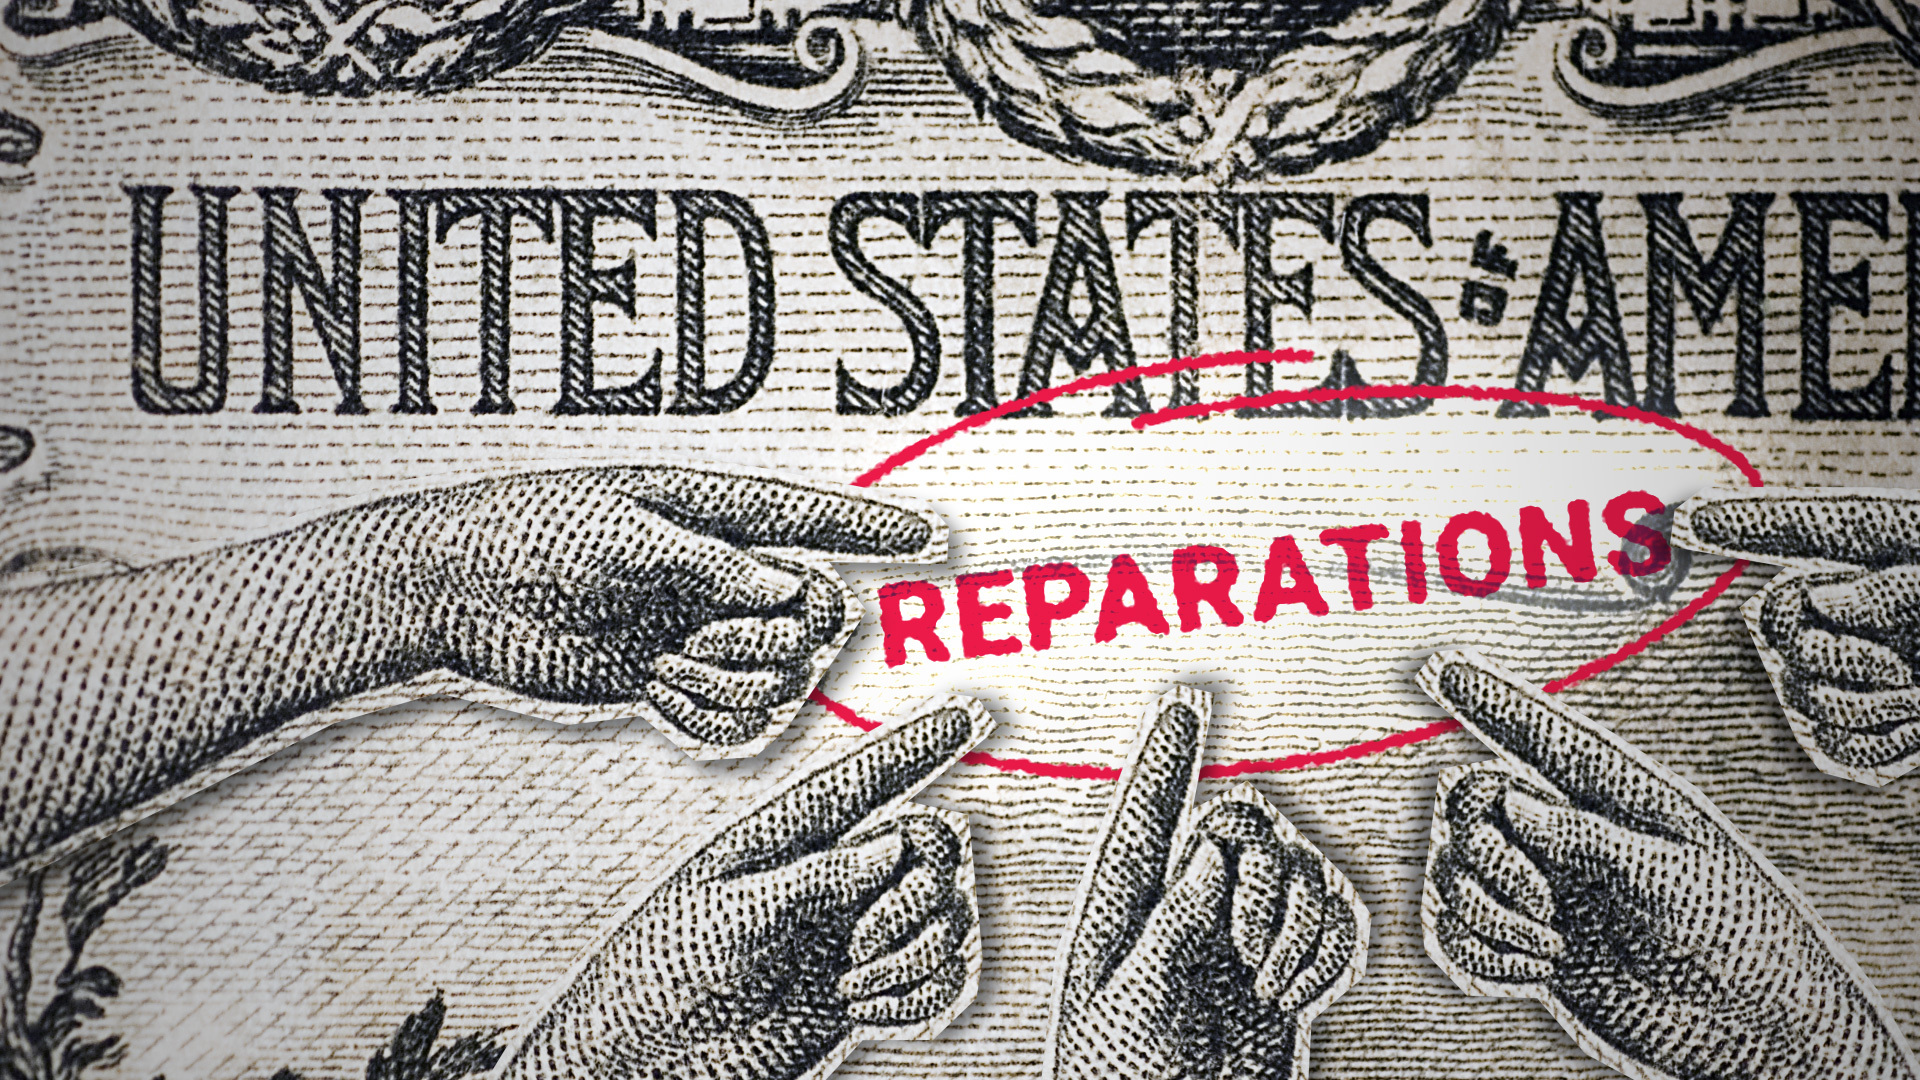 Reparations image